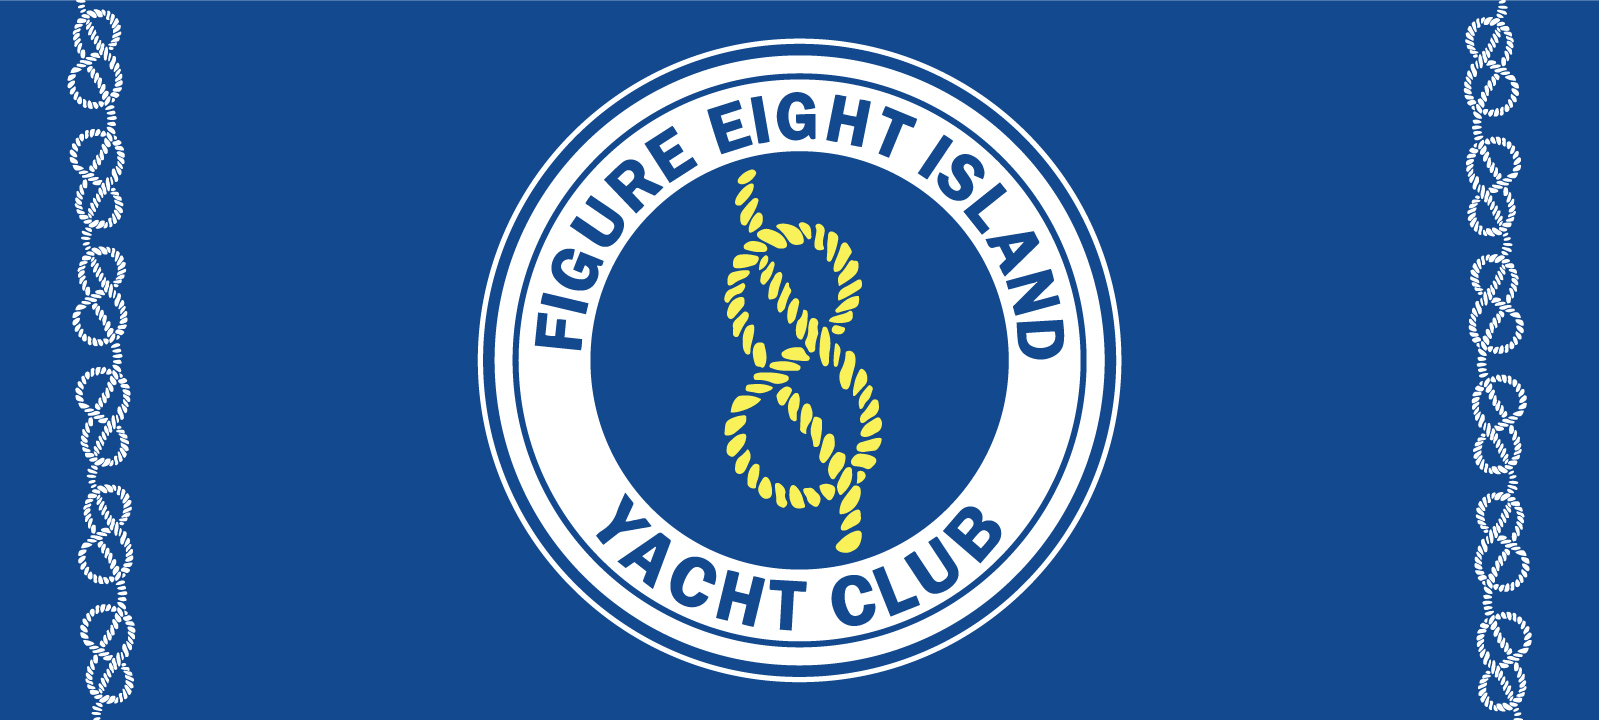 figure 8 yacht club membership cost